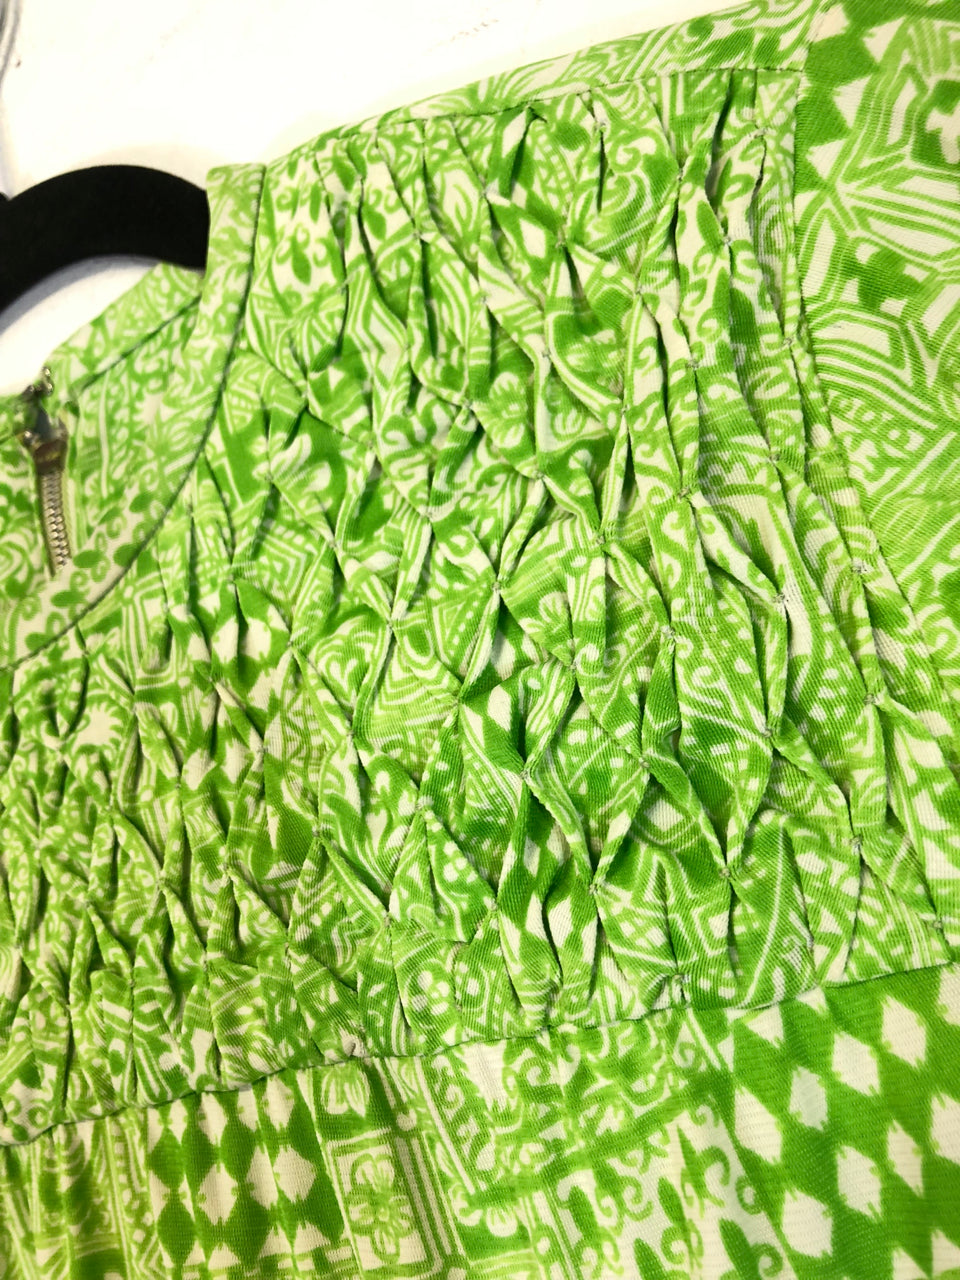 Green Printed 70s Dress